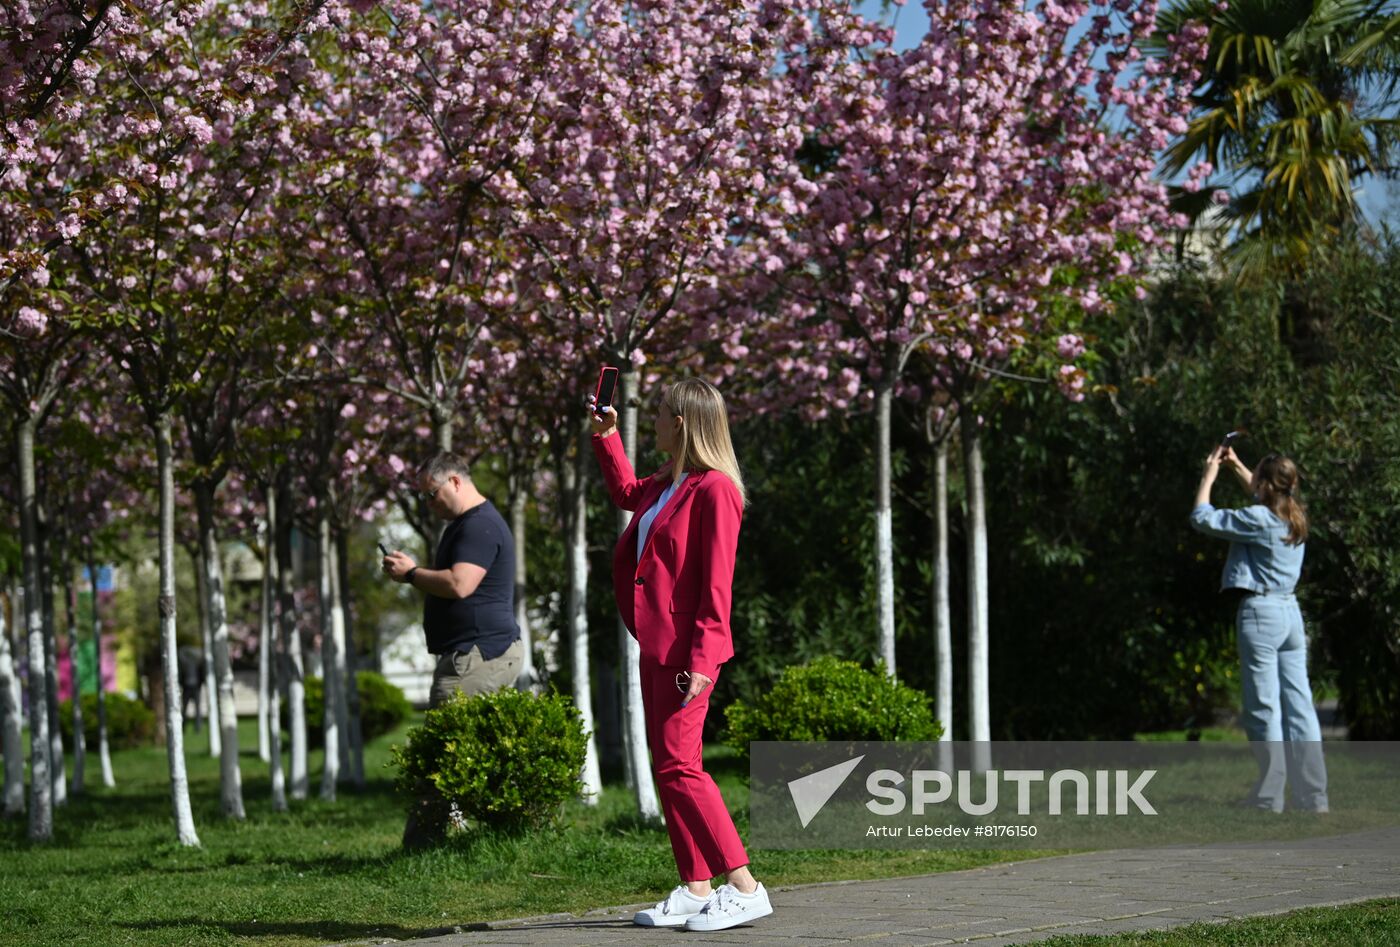 Russia Environment Cherry Blossom